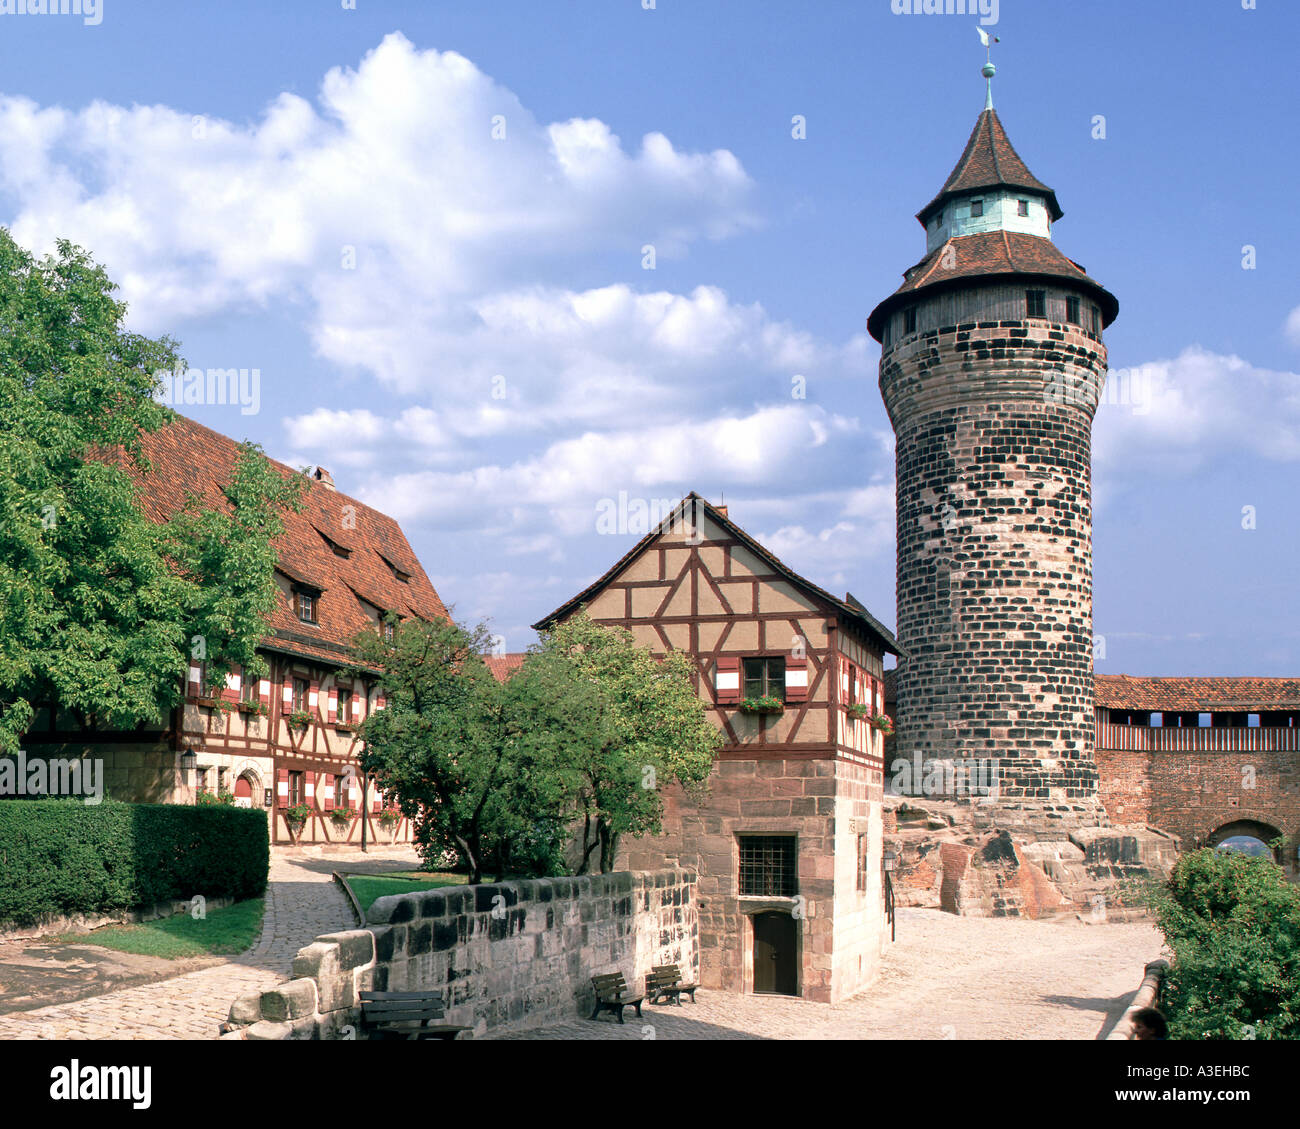 DE - BAVARIA: The historic Castle at Nuremberg Stock Photo